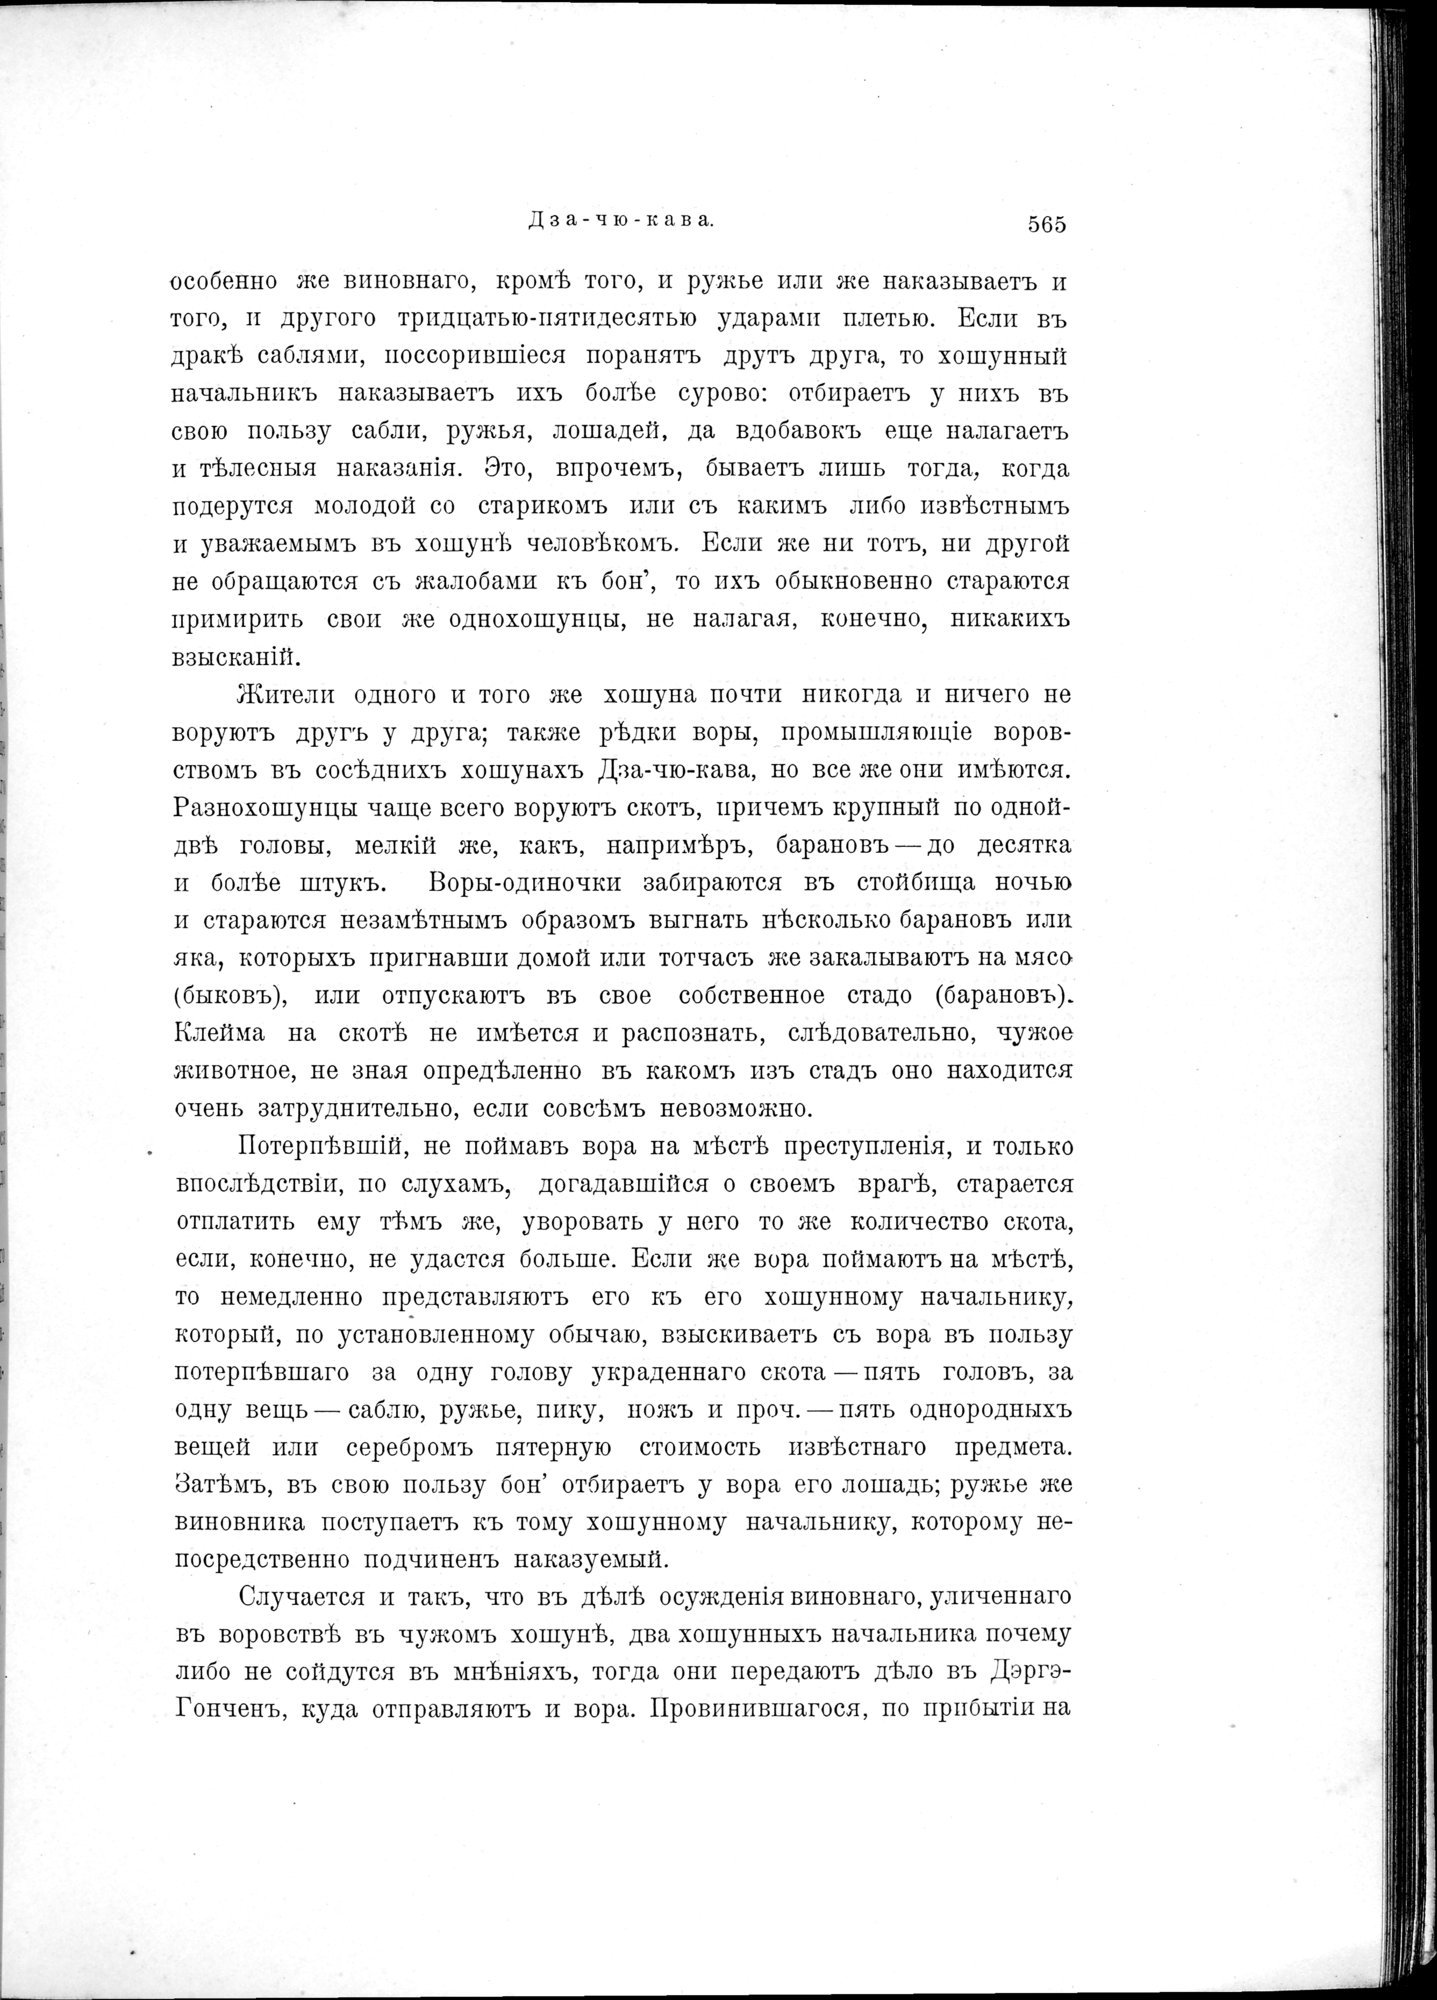 Mongoliia i Kam : vol.2 / Page 389 (Grayscale High Resolution Image)